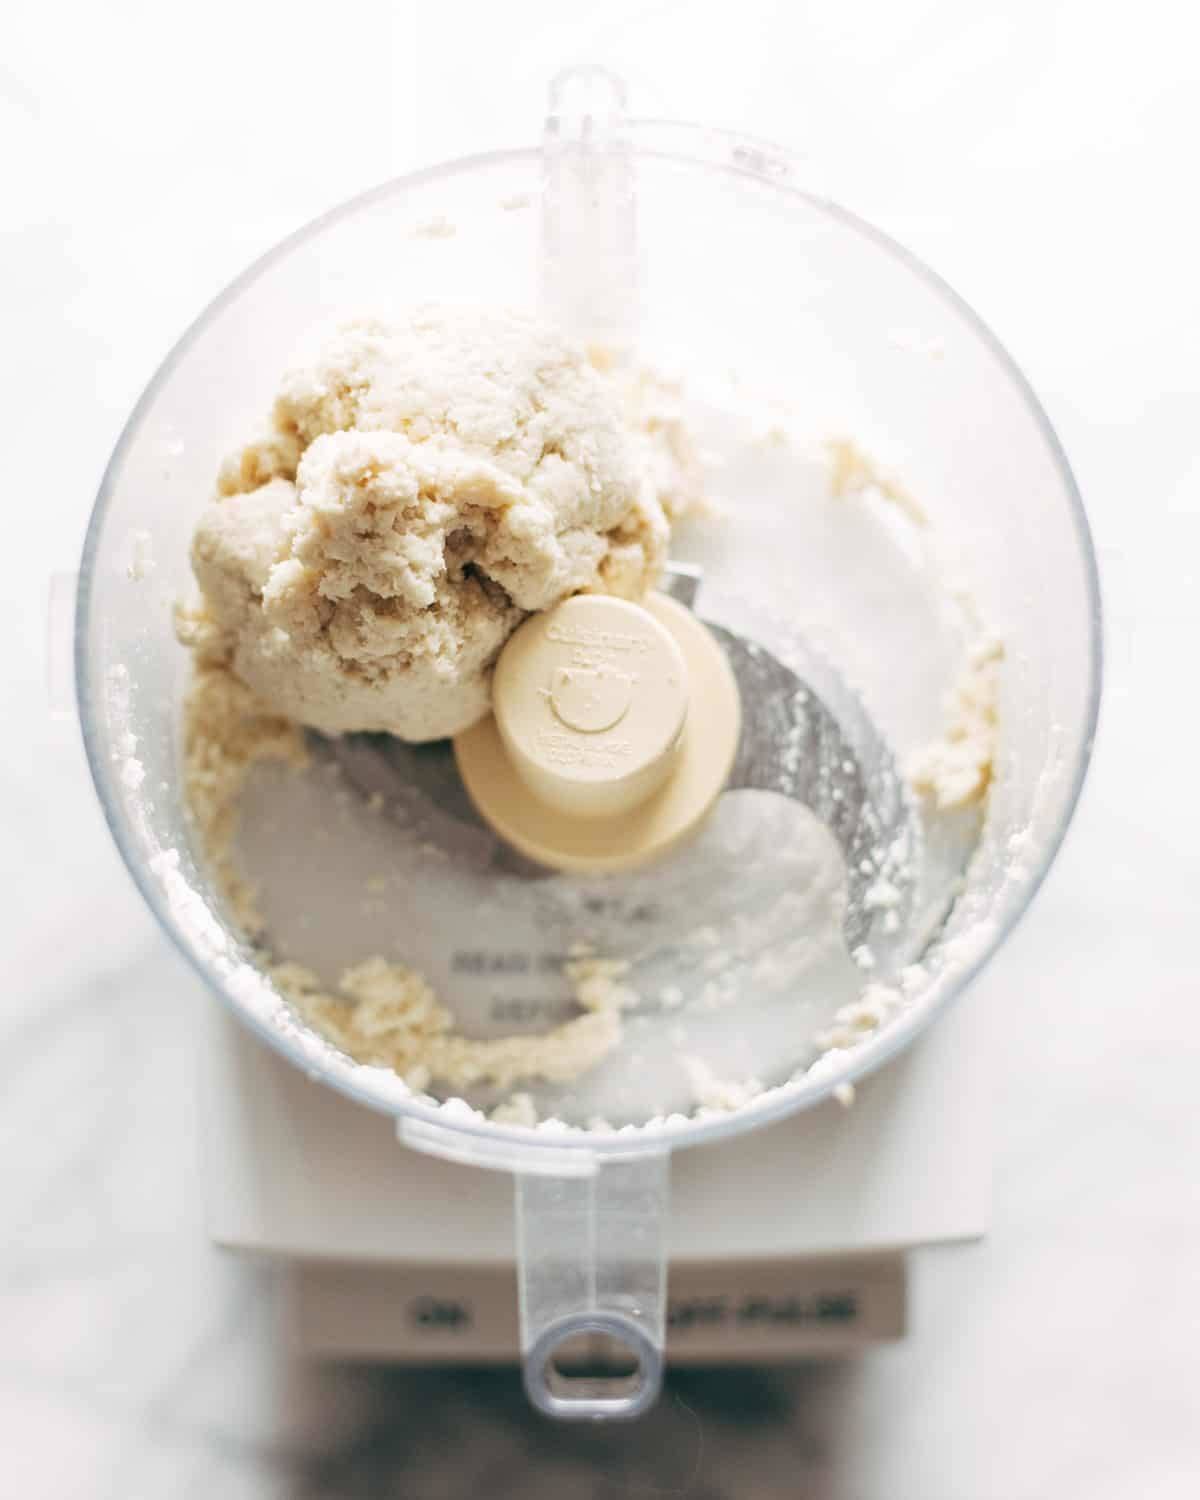 Cauliflower gnocchi dough in a food processor.